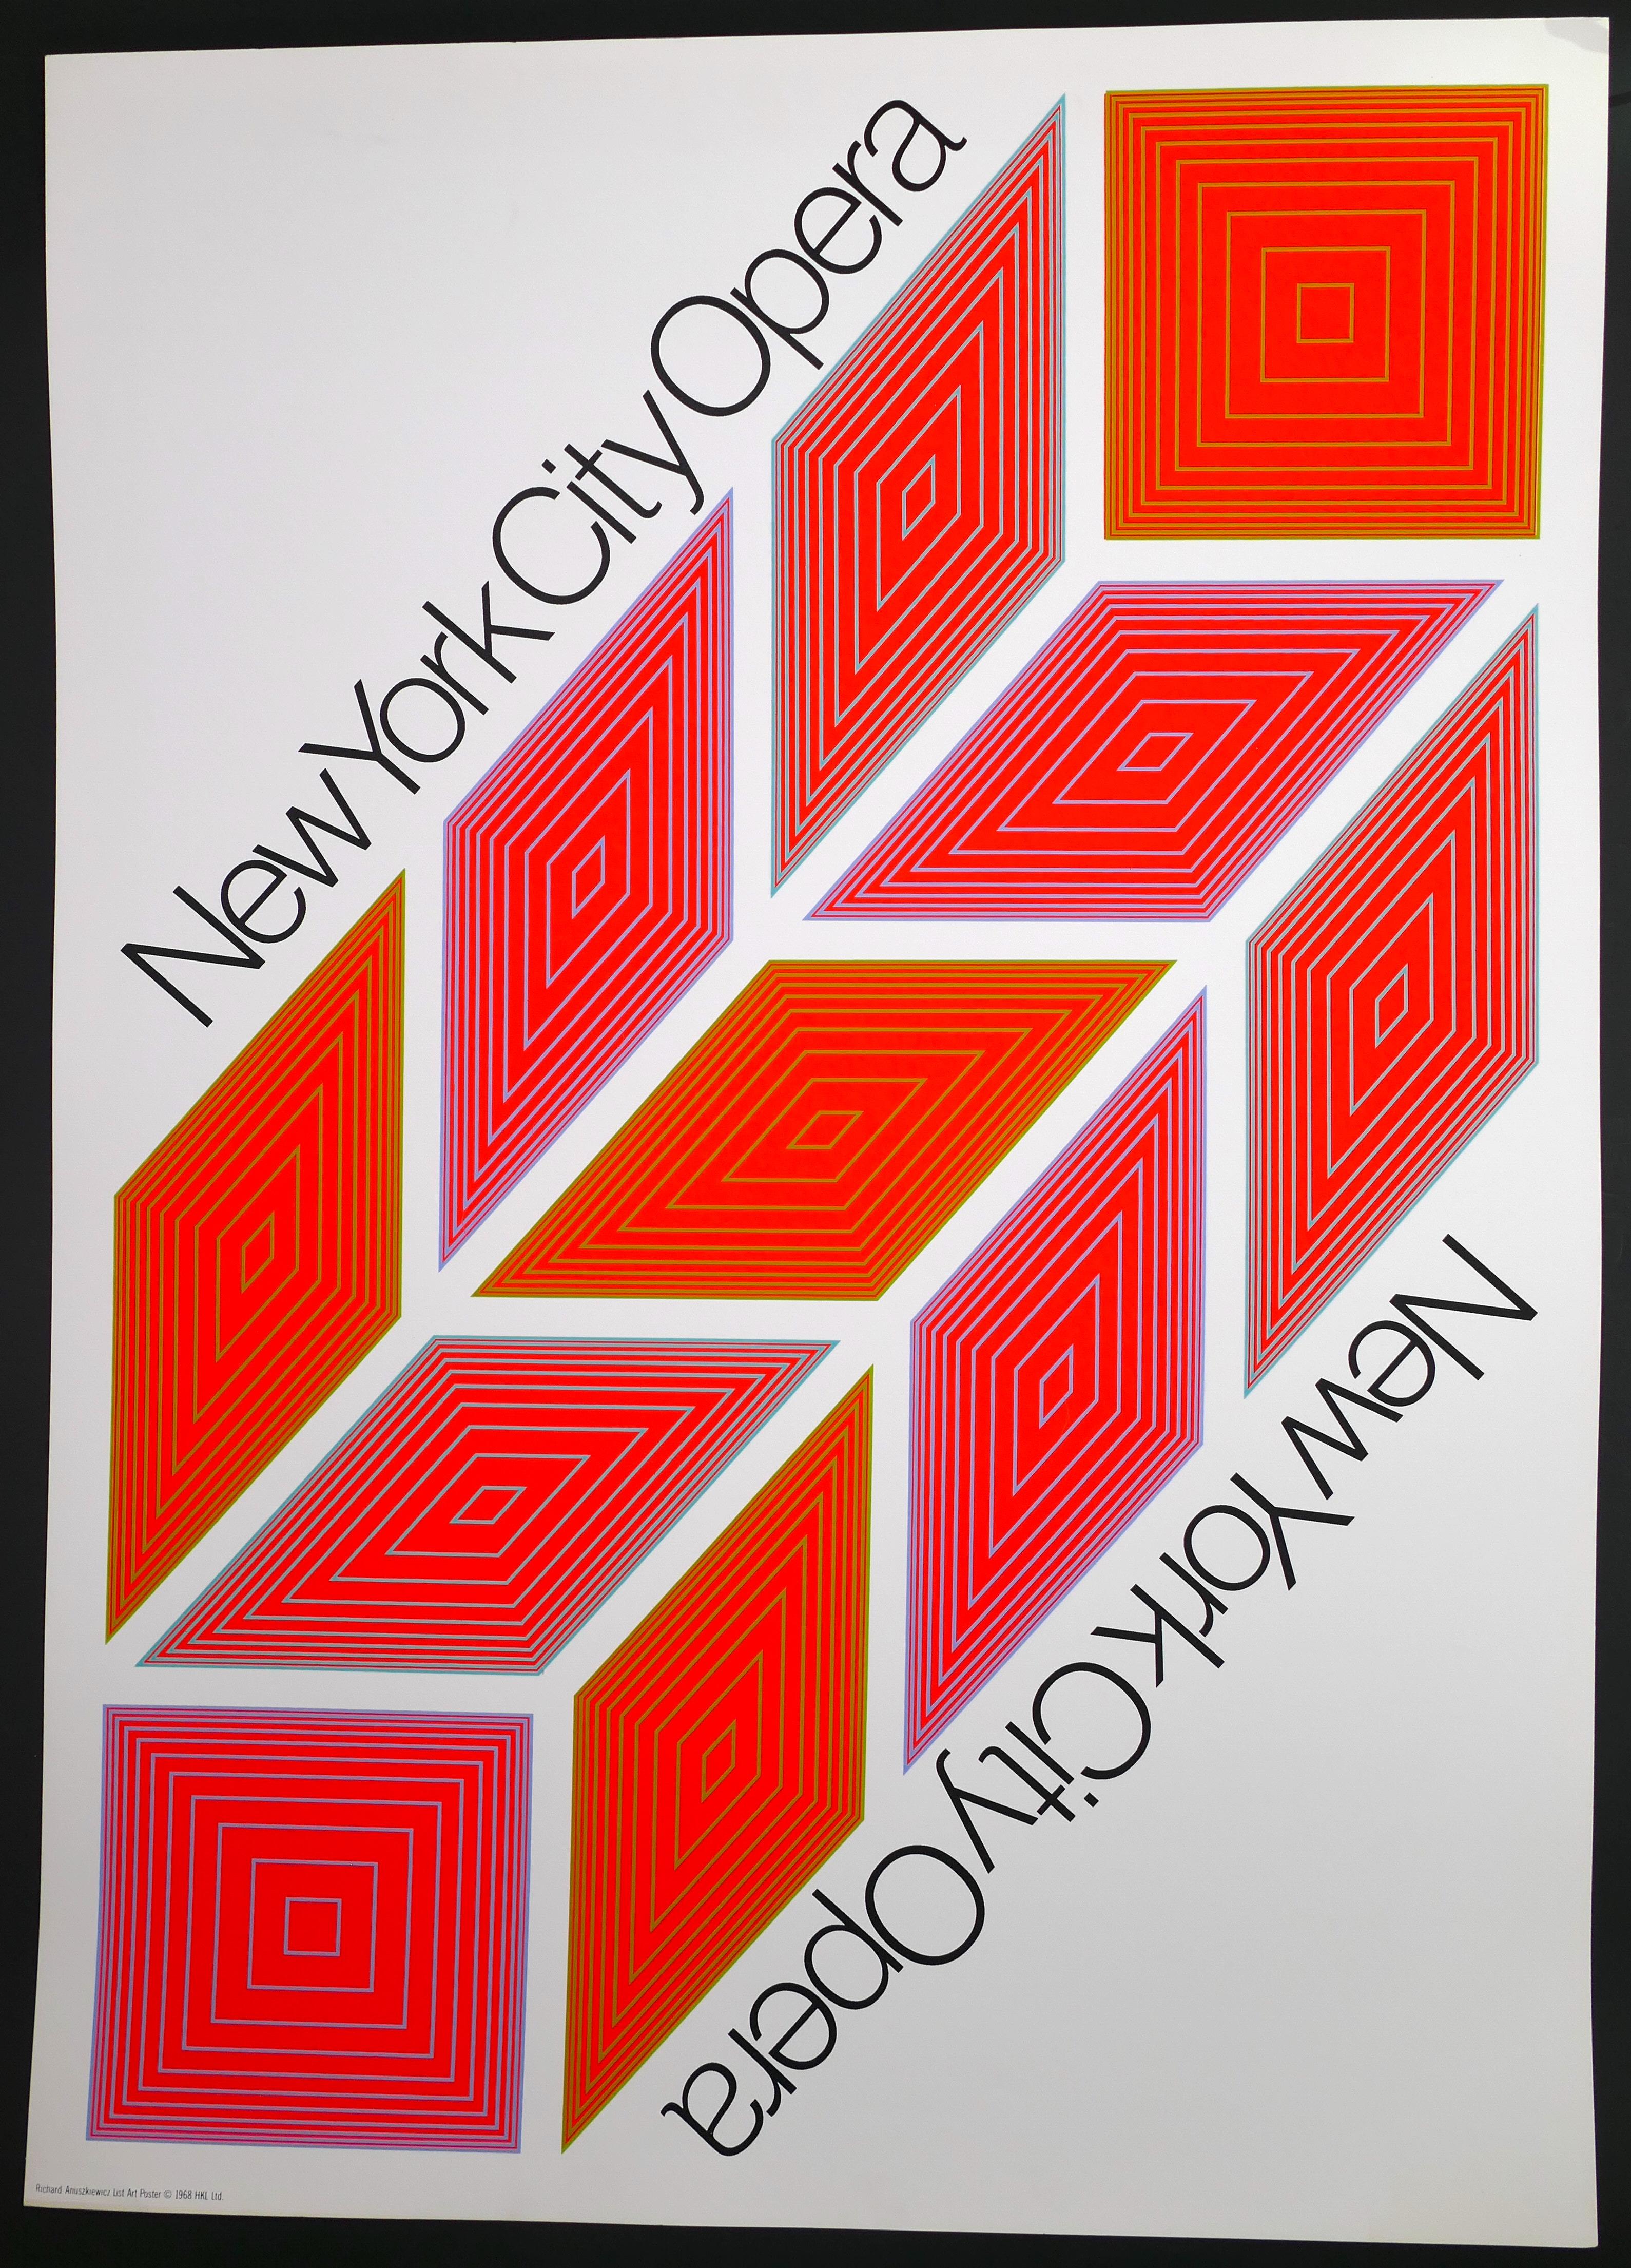 Richard Anuszkiewicz Abstract Print - New York City Opera - Vintage Poster - 1968